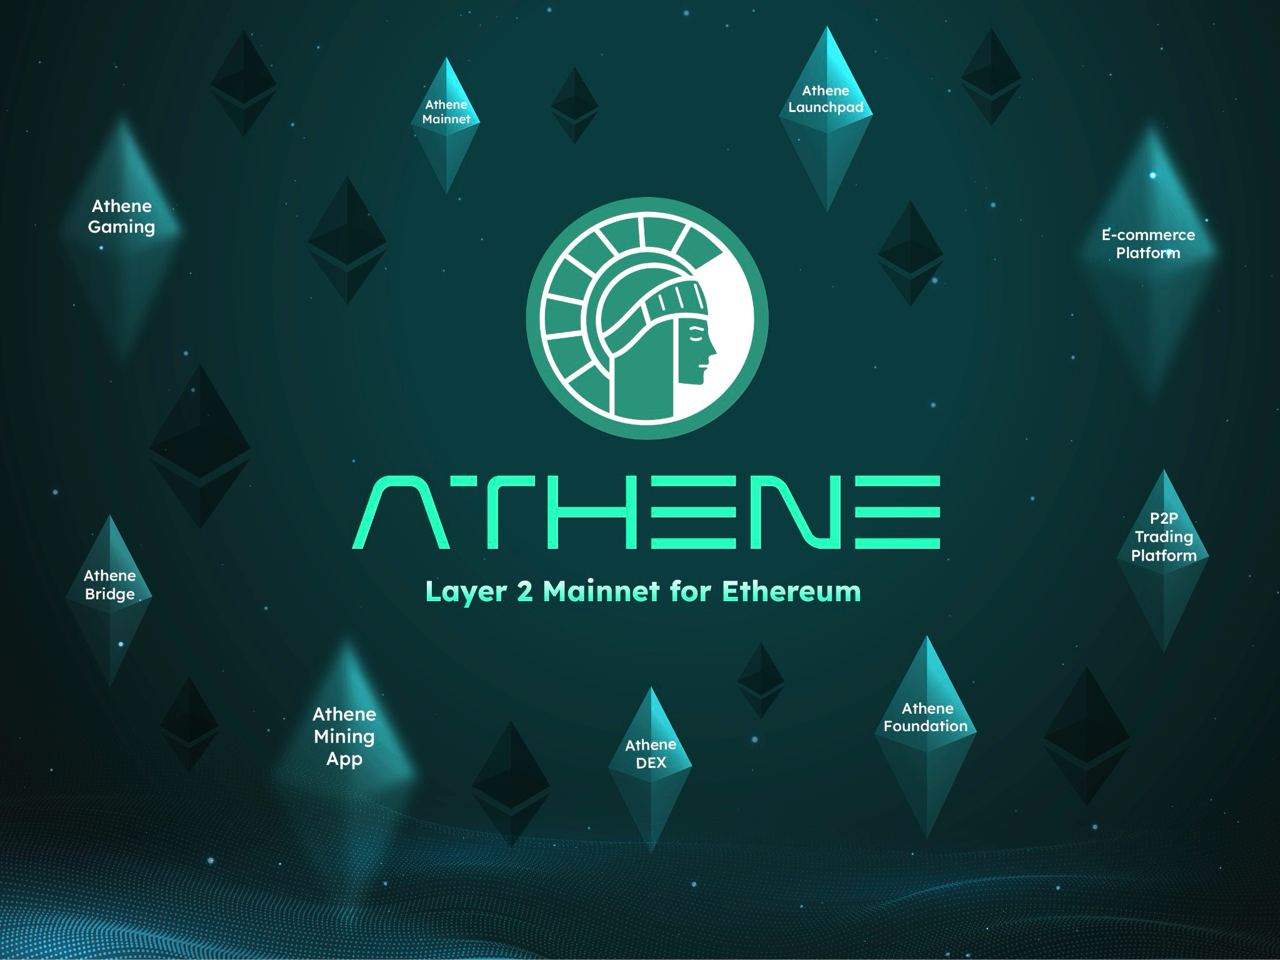 , Athene Network (ATH Network) Crosses 3 Million User Milestone, Establishes Itself as Leading Layer 2 Ethereum Solution